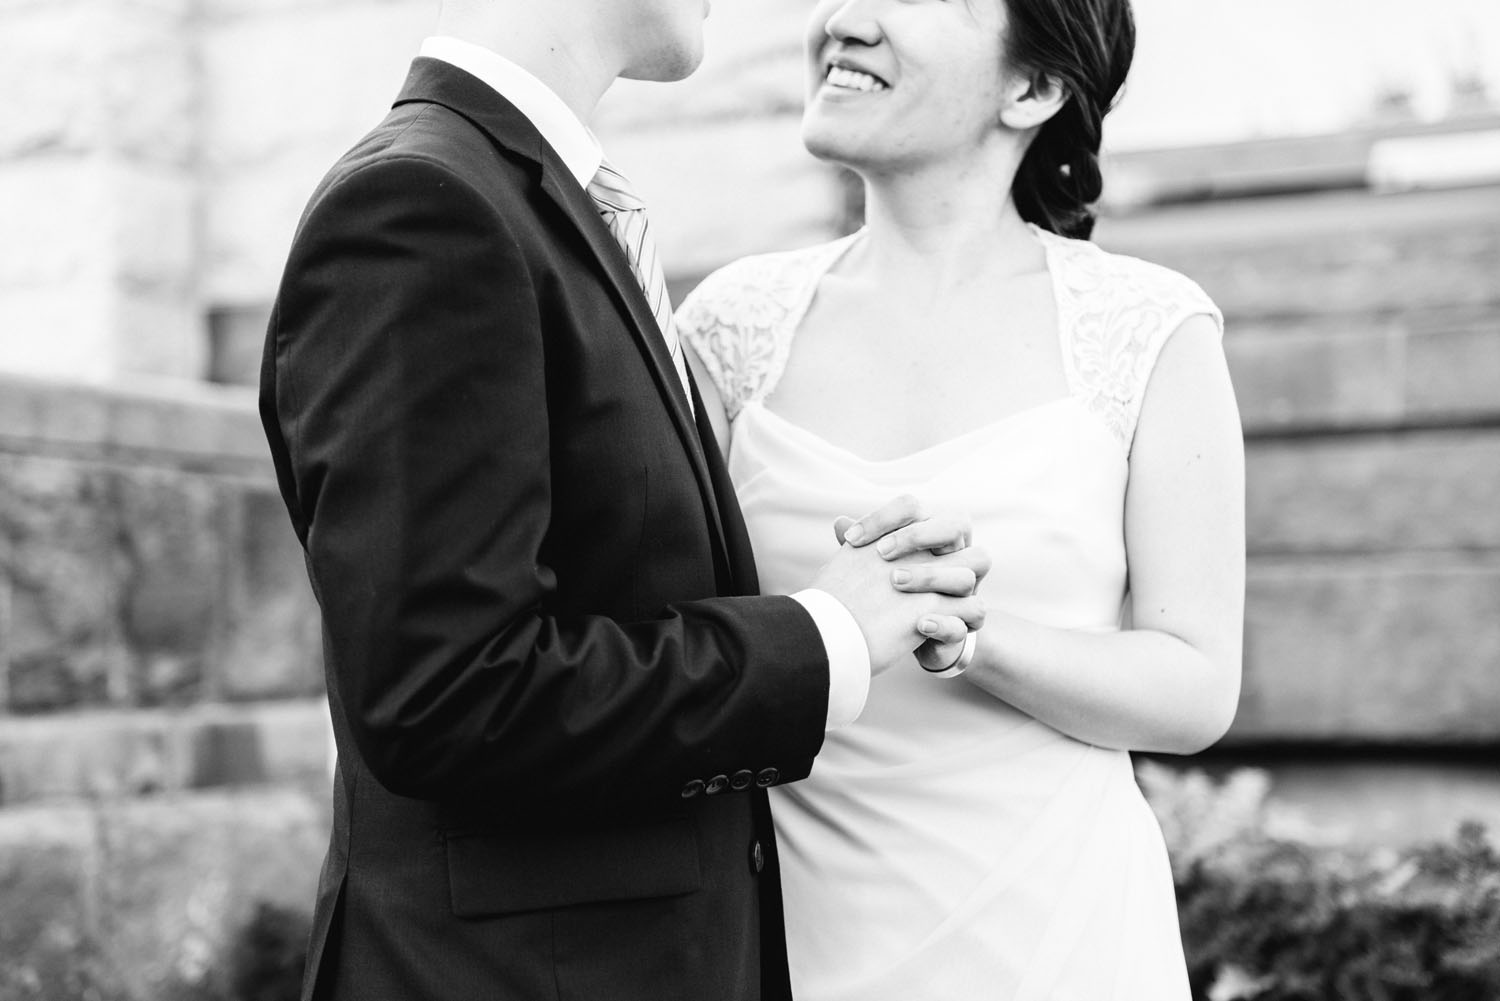 Yunsoo + Won | Intimate Cambridge City Hall Autumn Wedding | Boston and New England Wedding Photography | Lorna Stell Photo